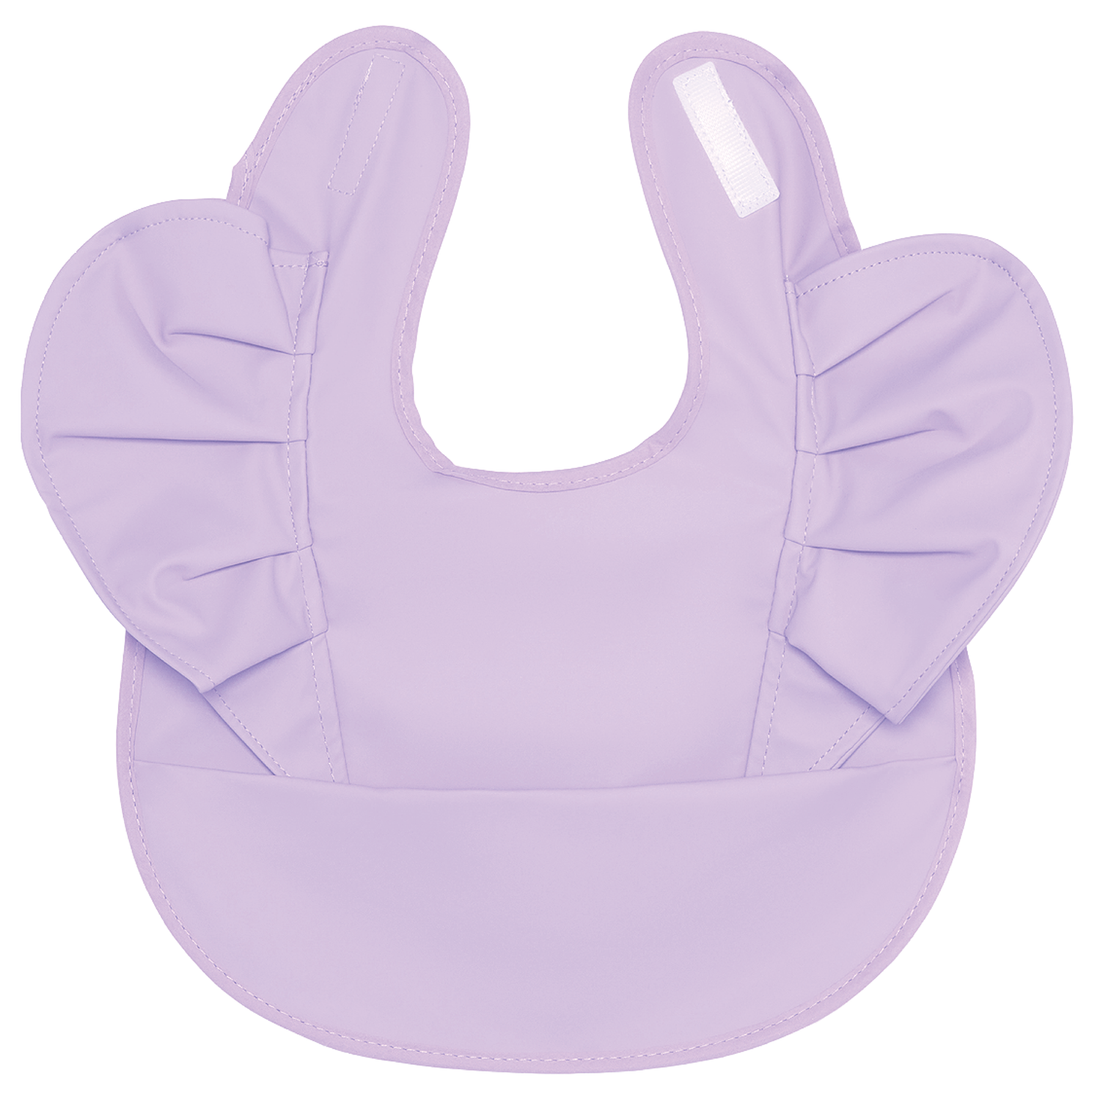 Waterproof Baby Bib (Purple)